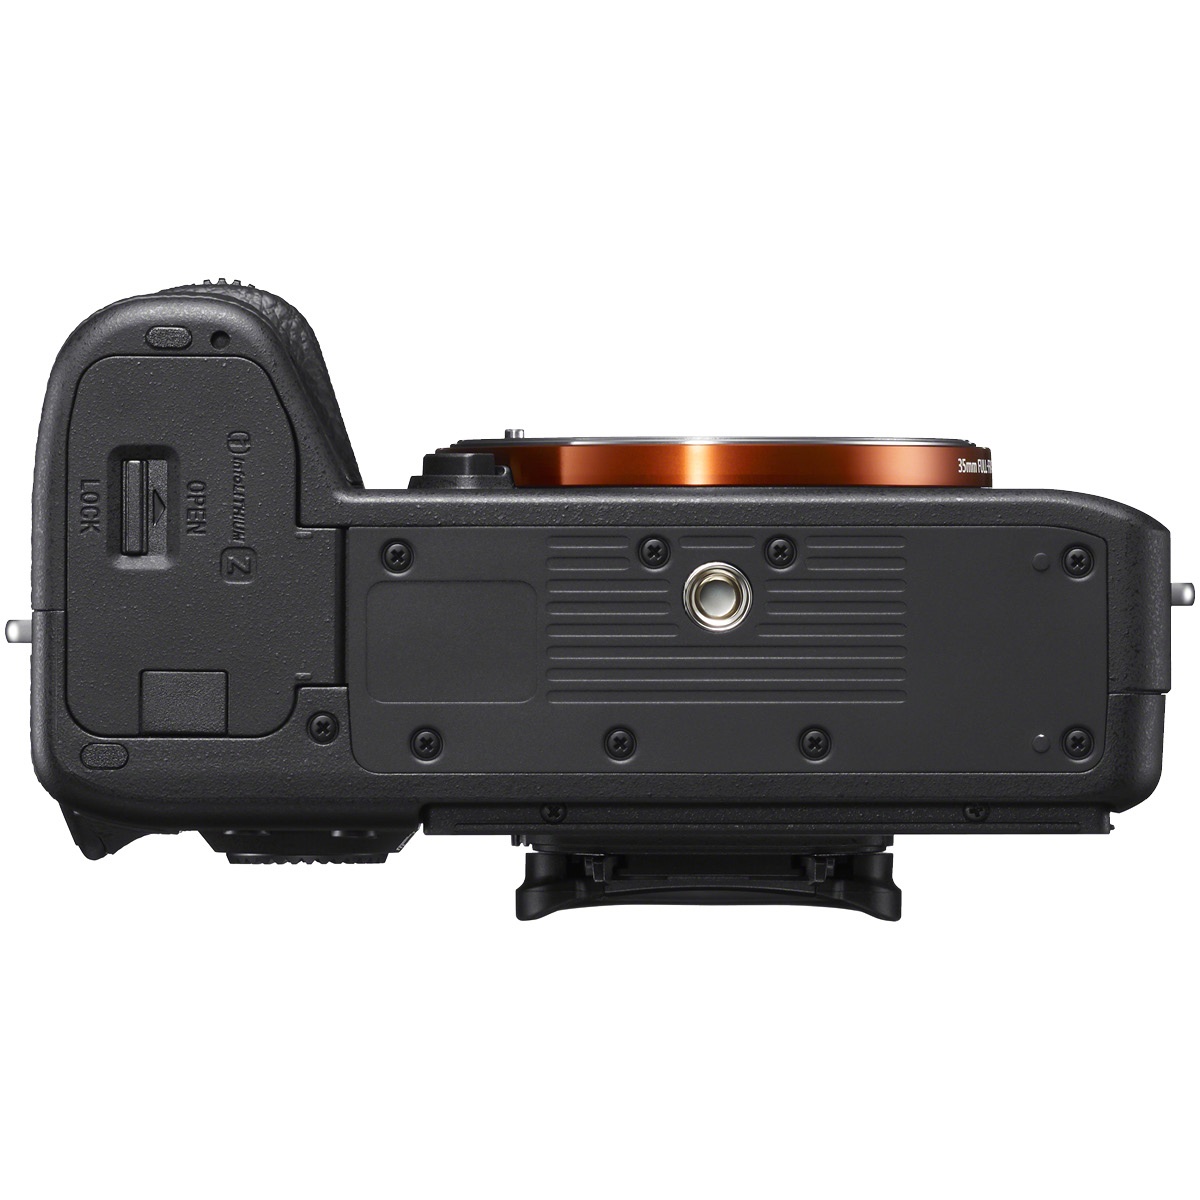 Sony Alpha 7 III Kit + 24-105 mm 1:4,0